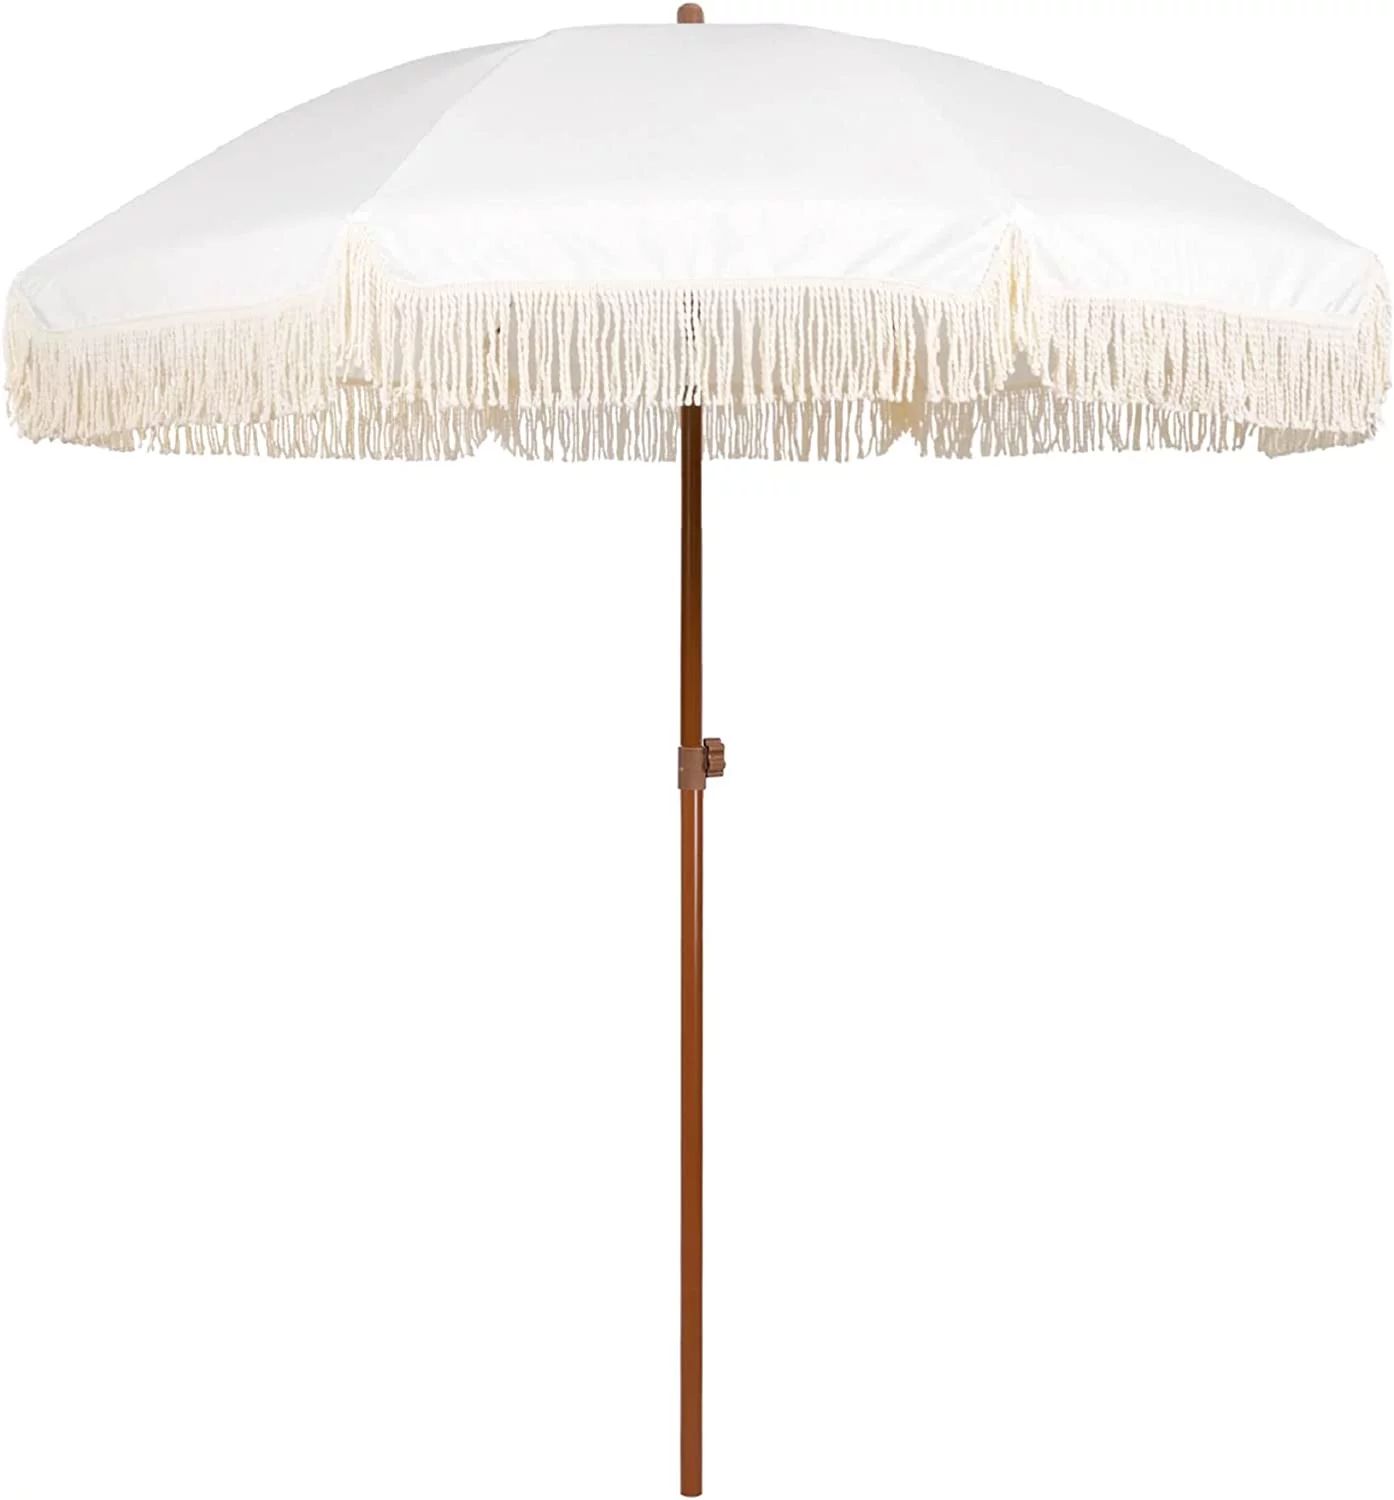 AMMSUN 7ft Patio Umbrella with Fringe Outdoor Tassel Umbrella UPF50+ Tilt Sun Shelter White Cream | Walmart (US)